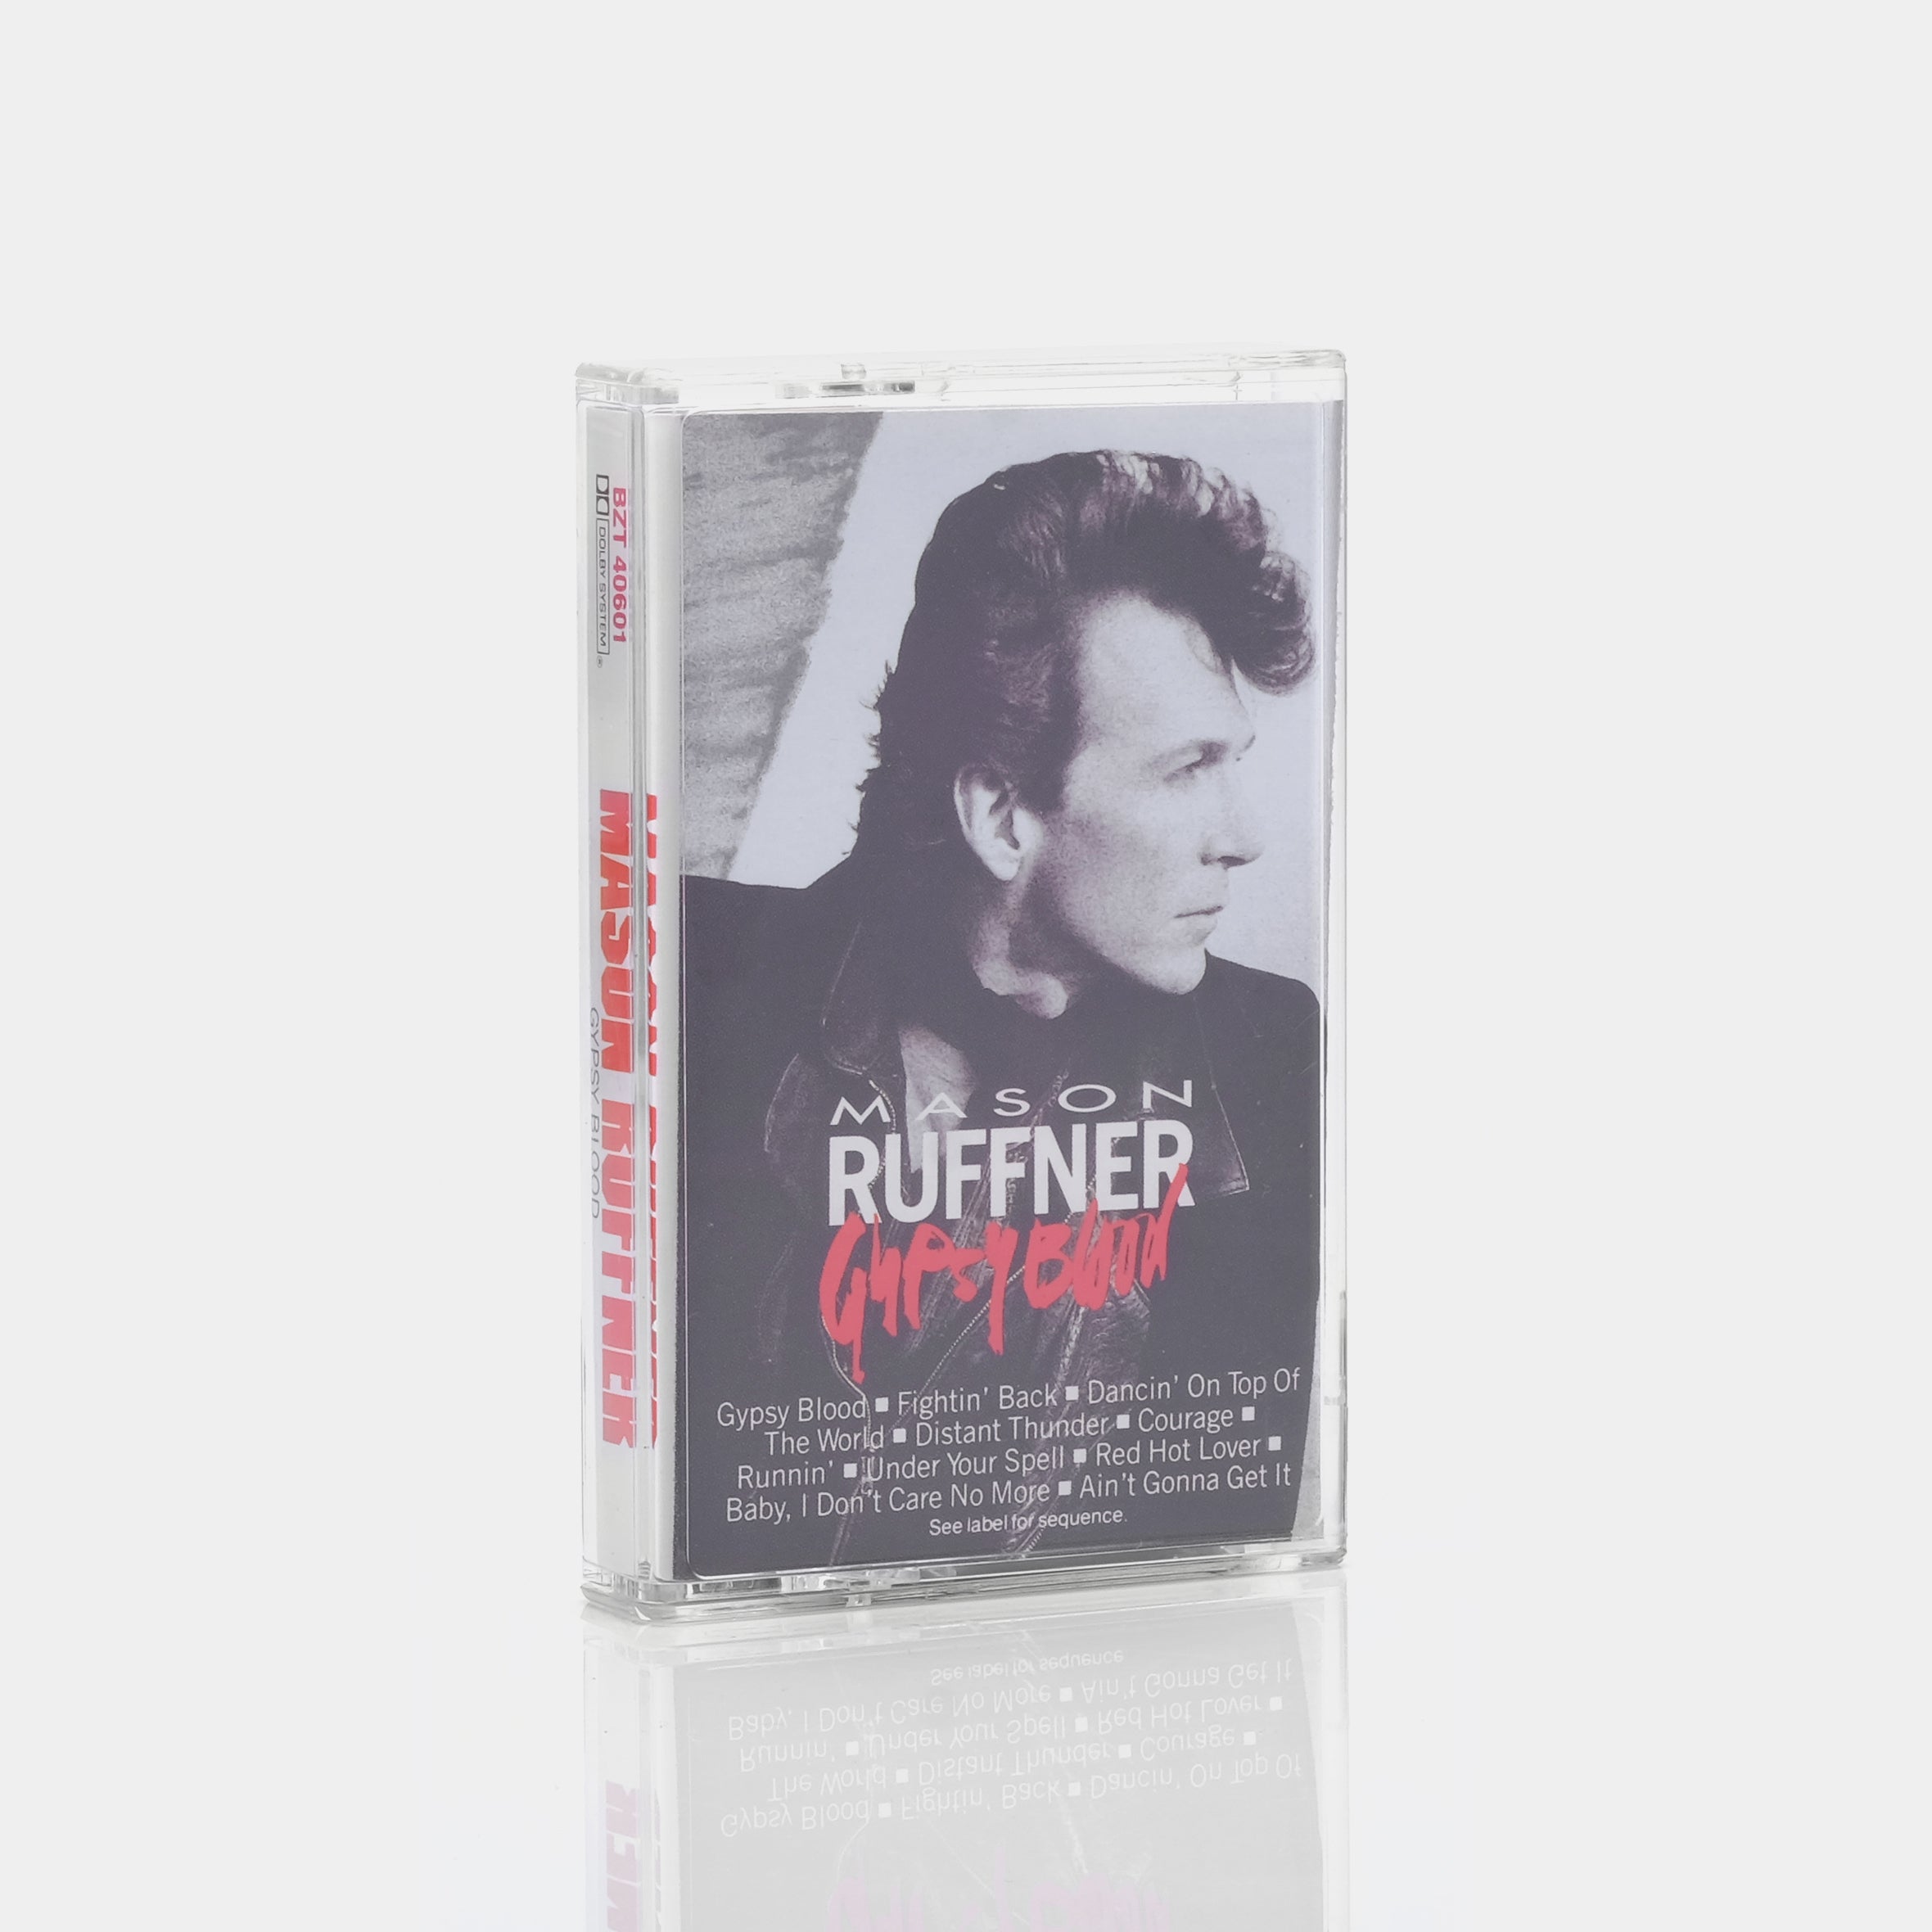 Mason Ruffner - Gypsy Blood Cassette Tape